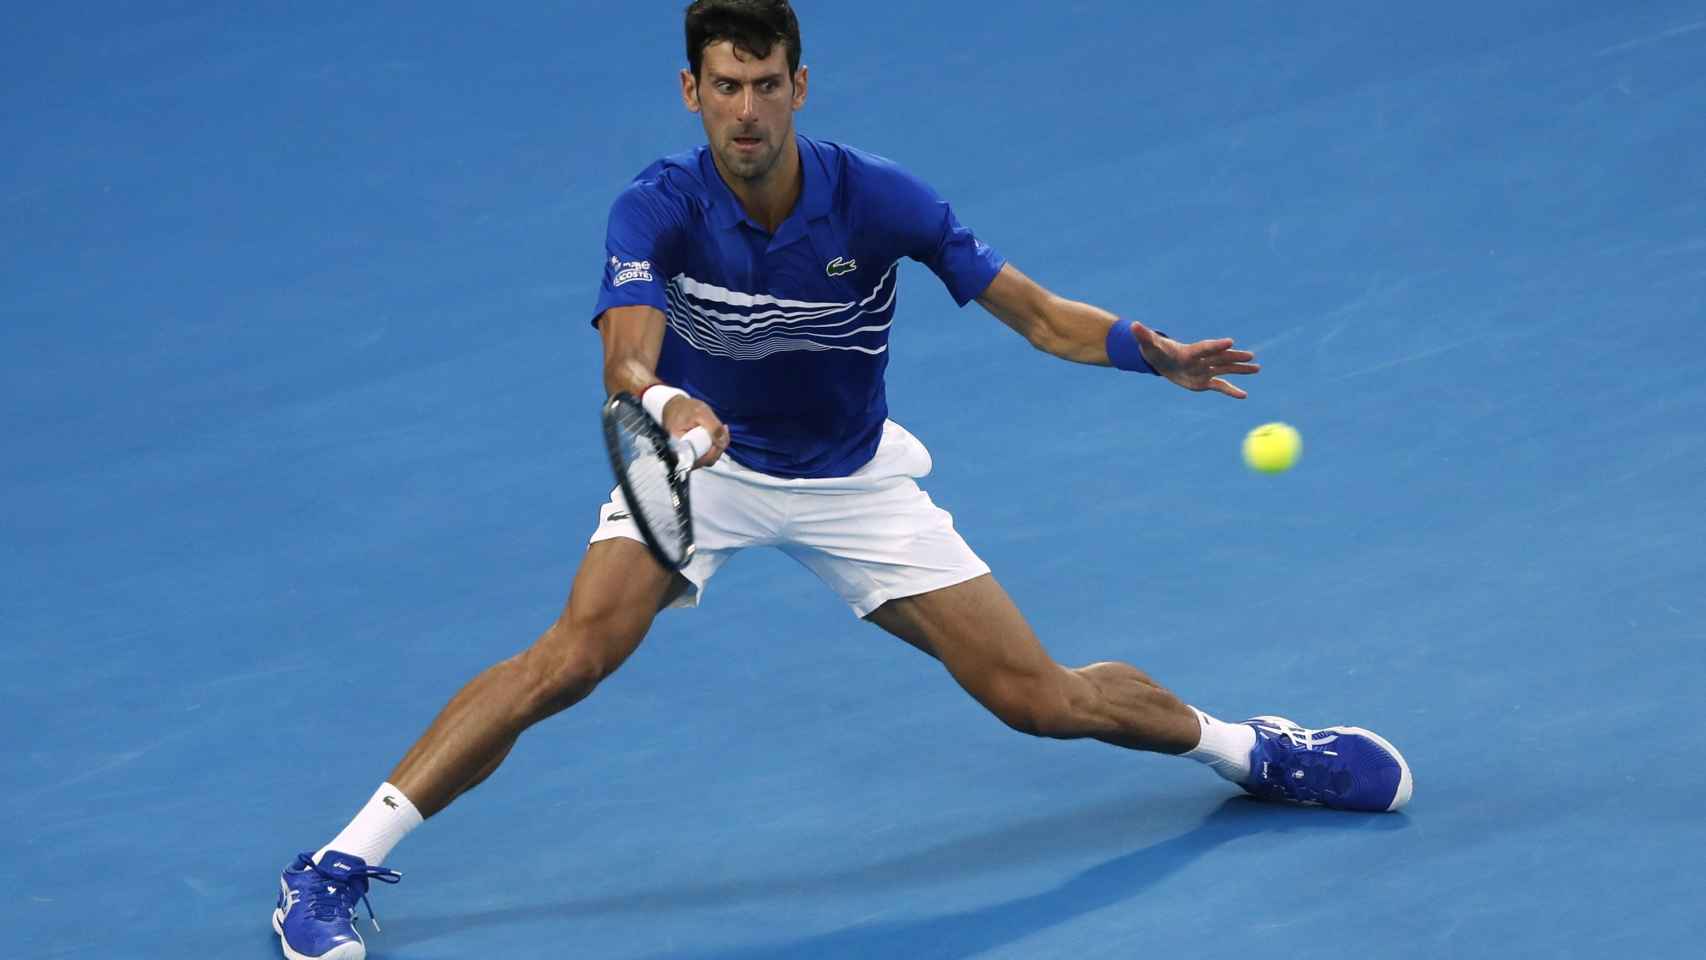 Djokovic en el Open de Australia